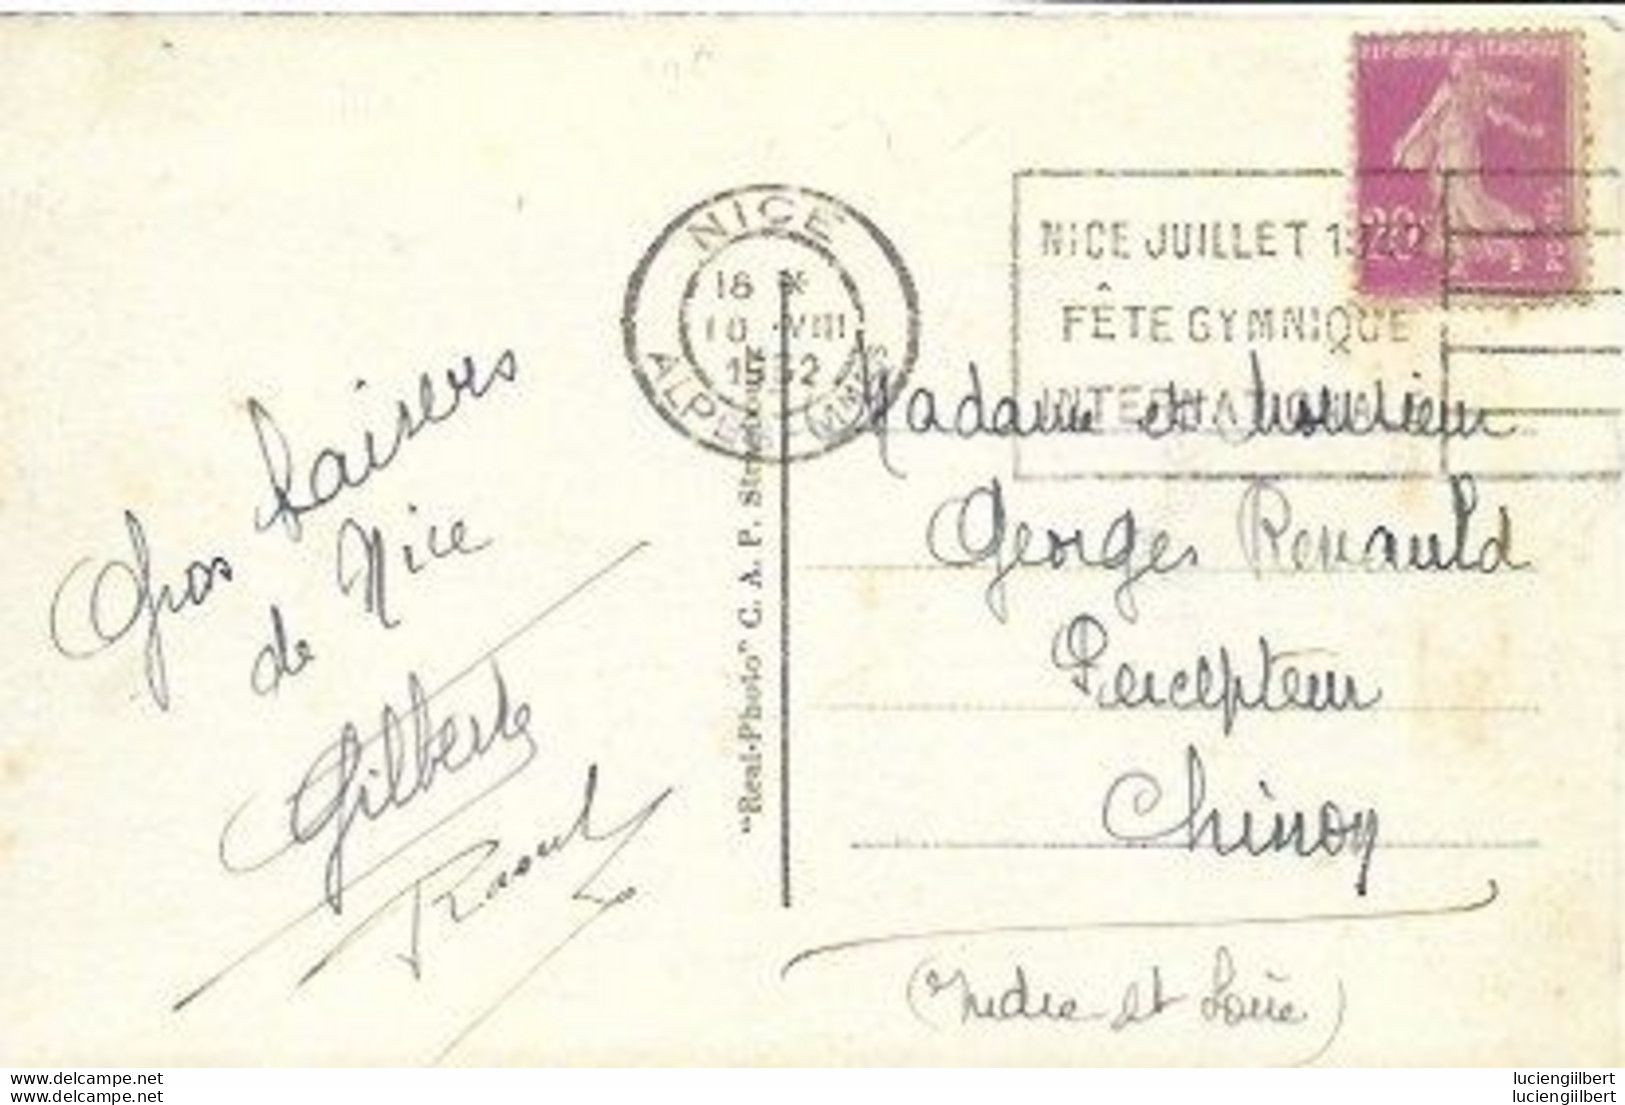 ALPES MARITIMES 06  - NICE    - FLAMME N° NIC 114 F - NICE JUILLET 1932 FETE GYMNIQUE INTERNATIONALE -  1932 - Mechanical Postmarks (Advertisement)